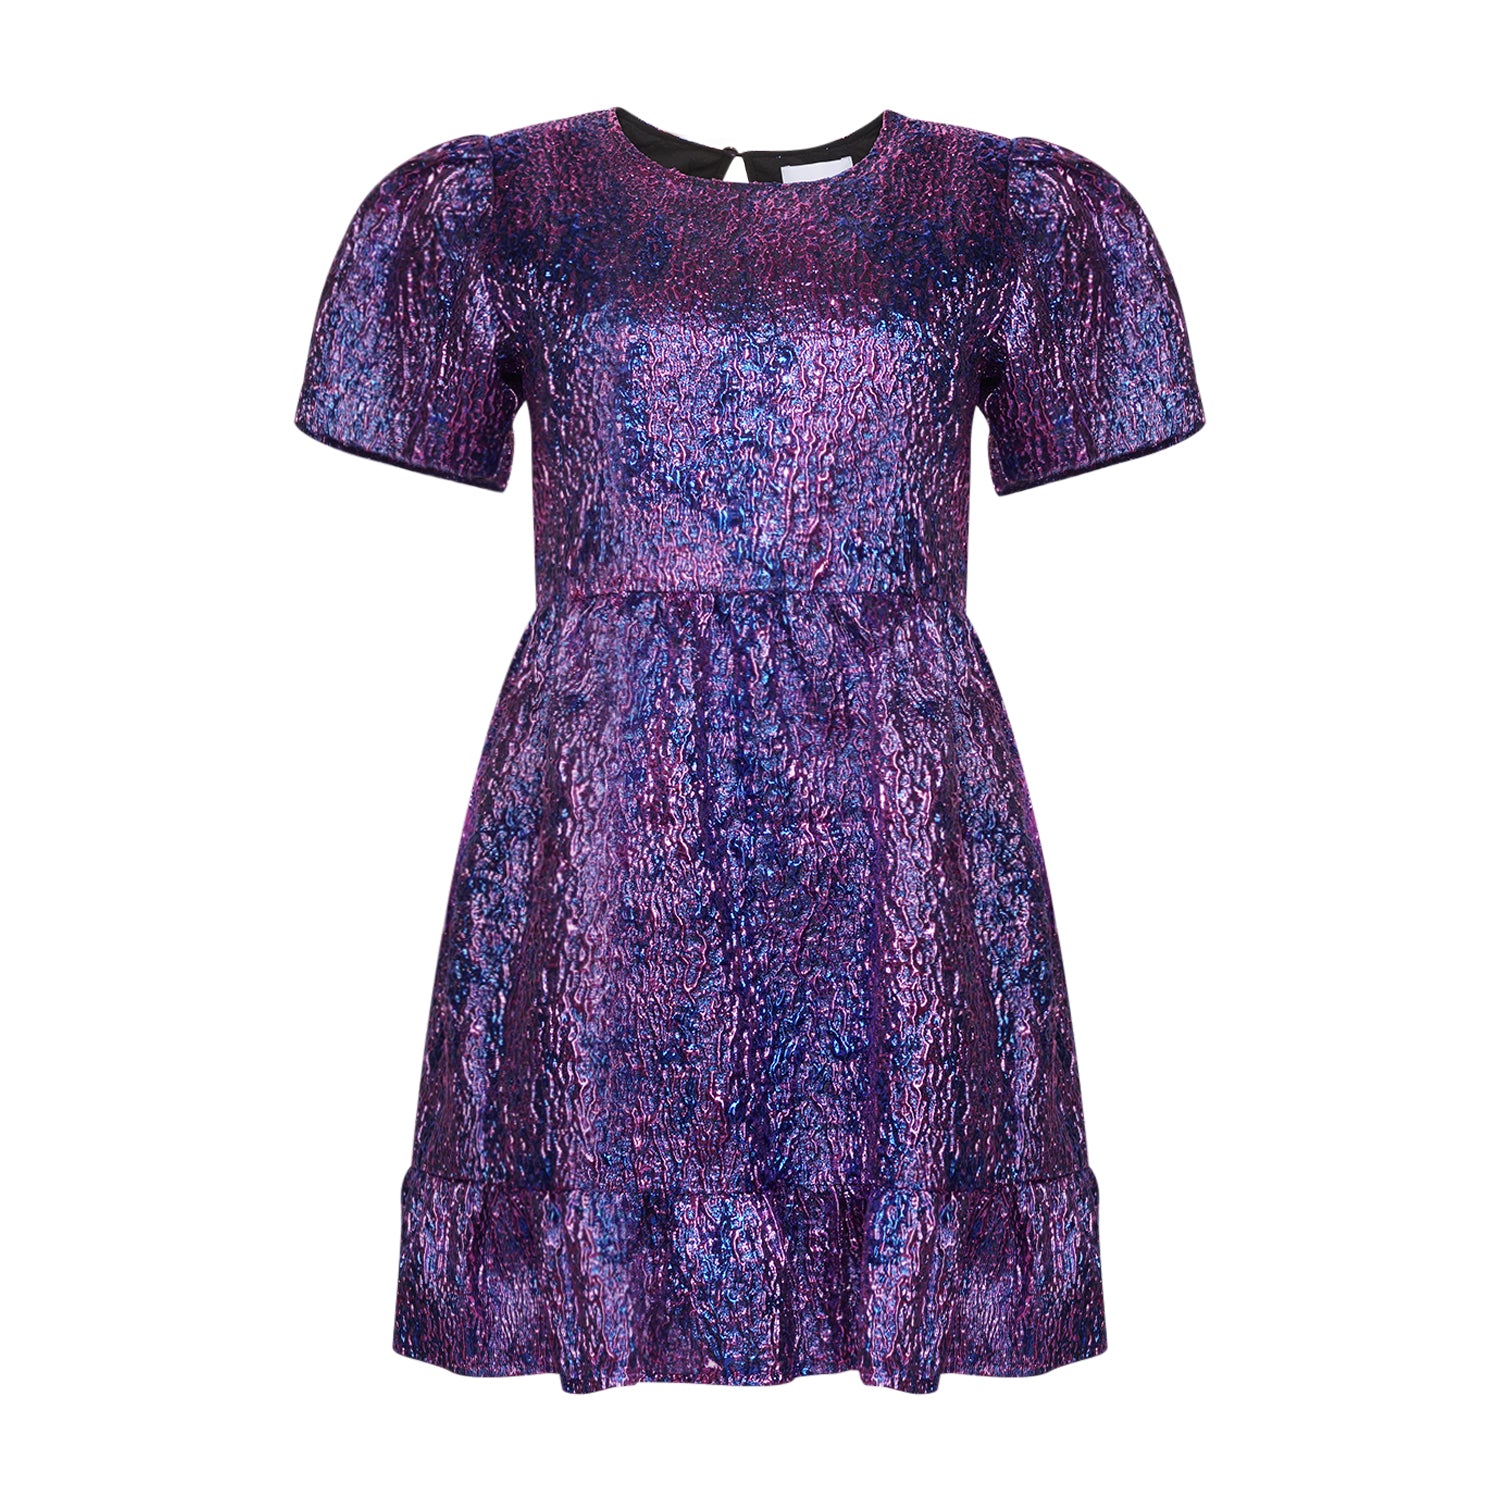 Maine Taylor Dress - Lilac /Blue Mix